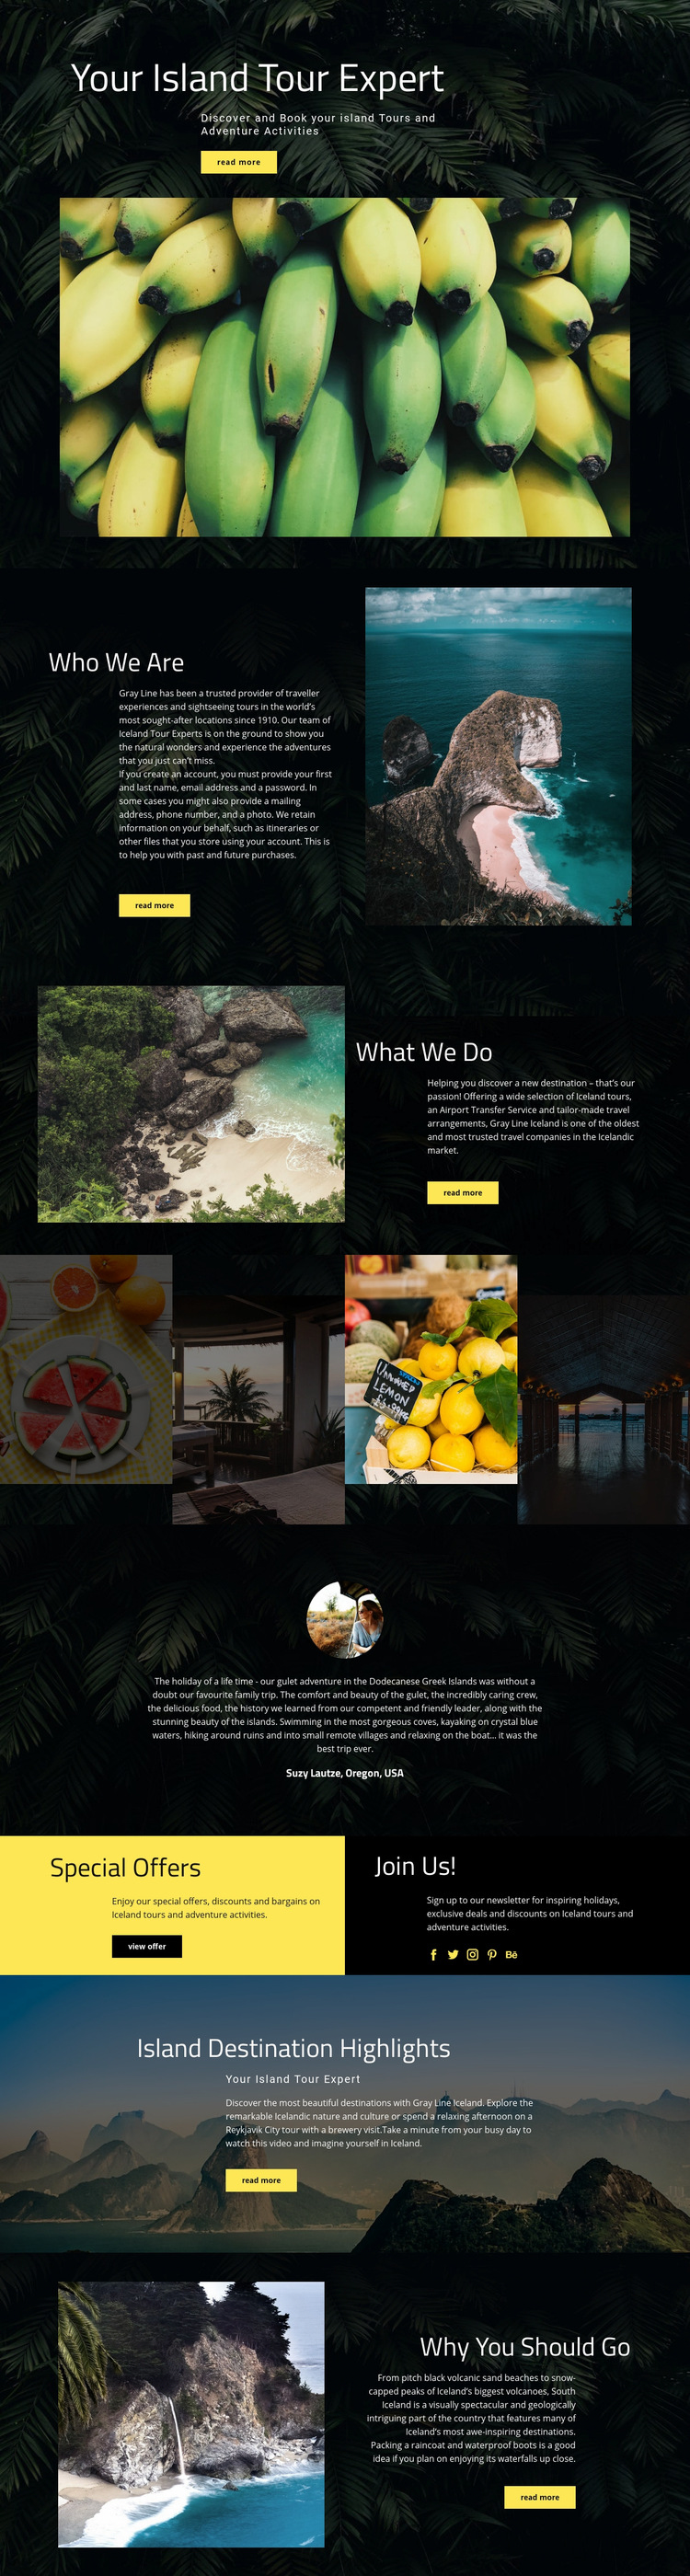 Island Travel Web Page Design